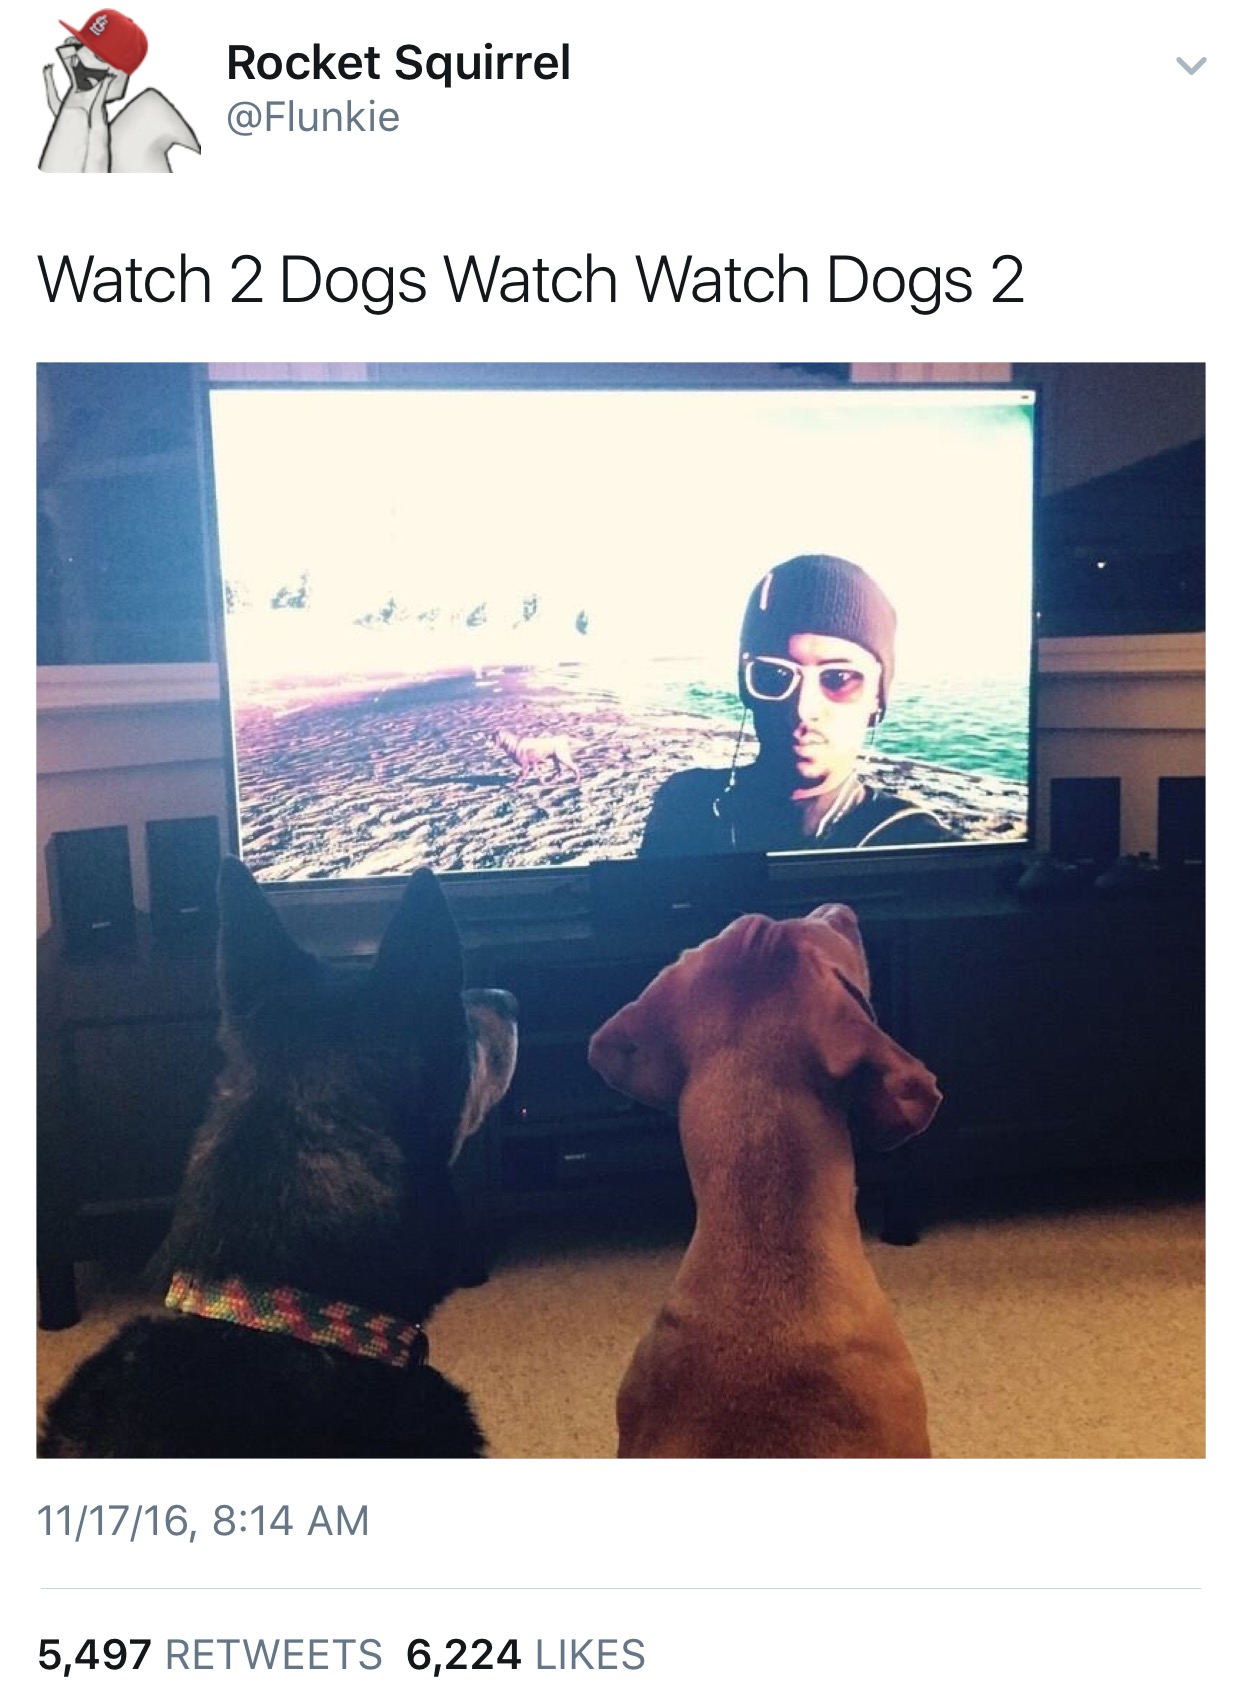 watch 2 dogs watch watch dogs 2 - Rocket Squirrel Watch 2 Dogs Watch Watch Dogs 2 111716, 5,497 6,224